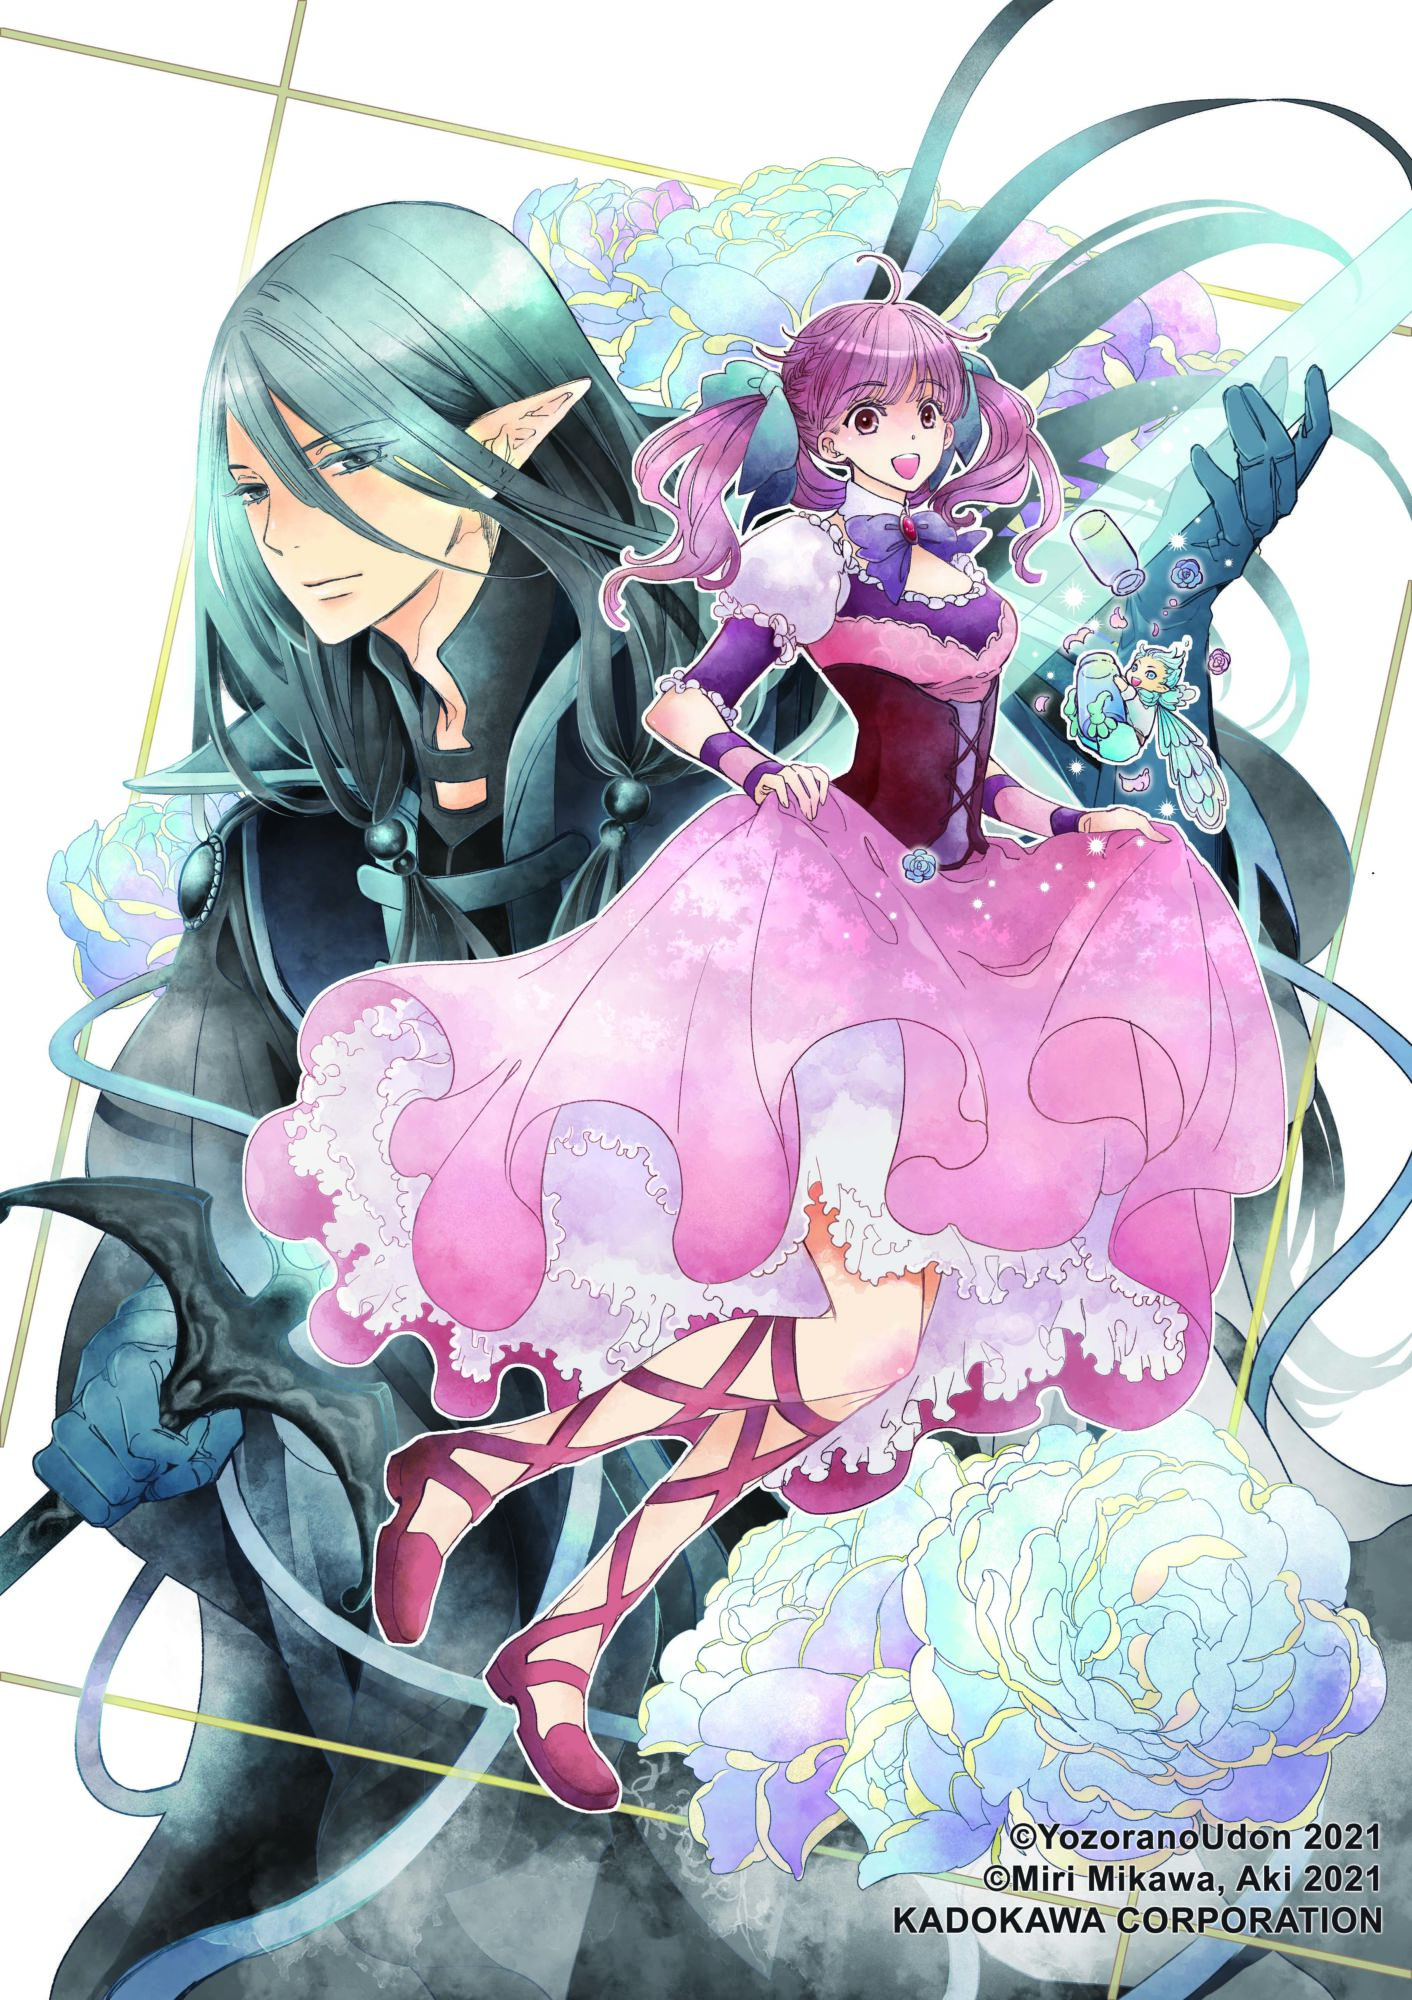 Sugar Apple Fairy Tale Yen Press Announces Digital Release of Manga